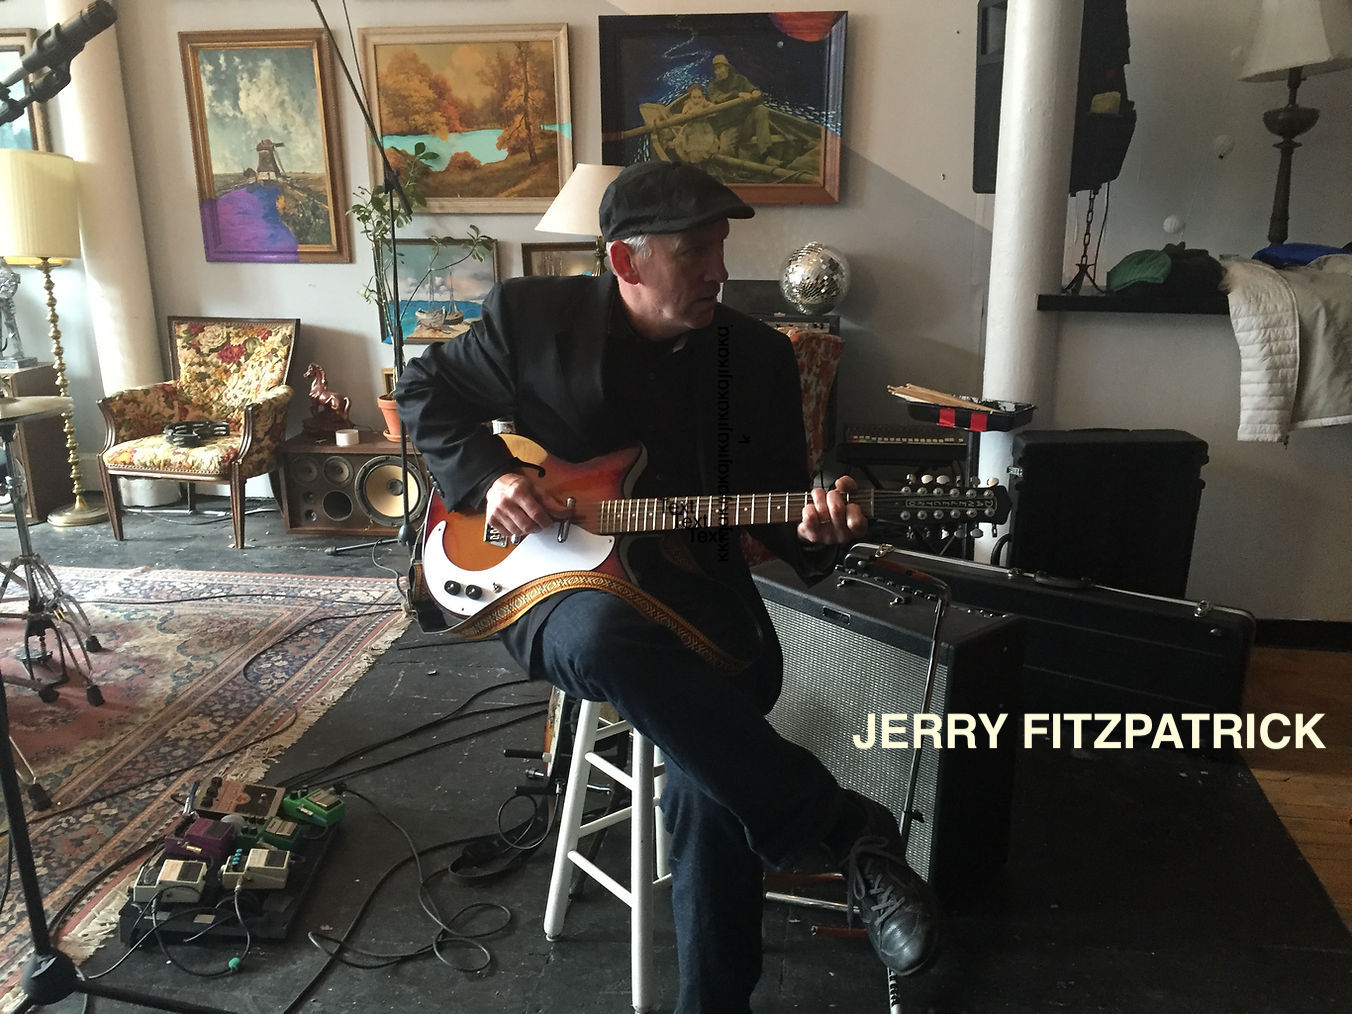 Jerry Fitzpatrick